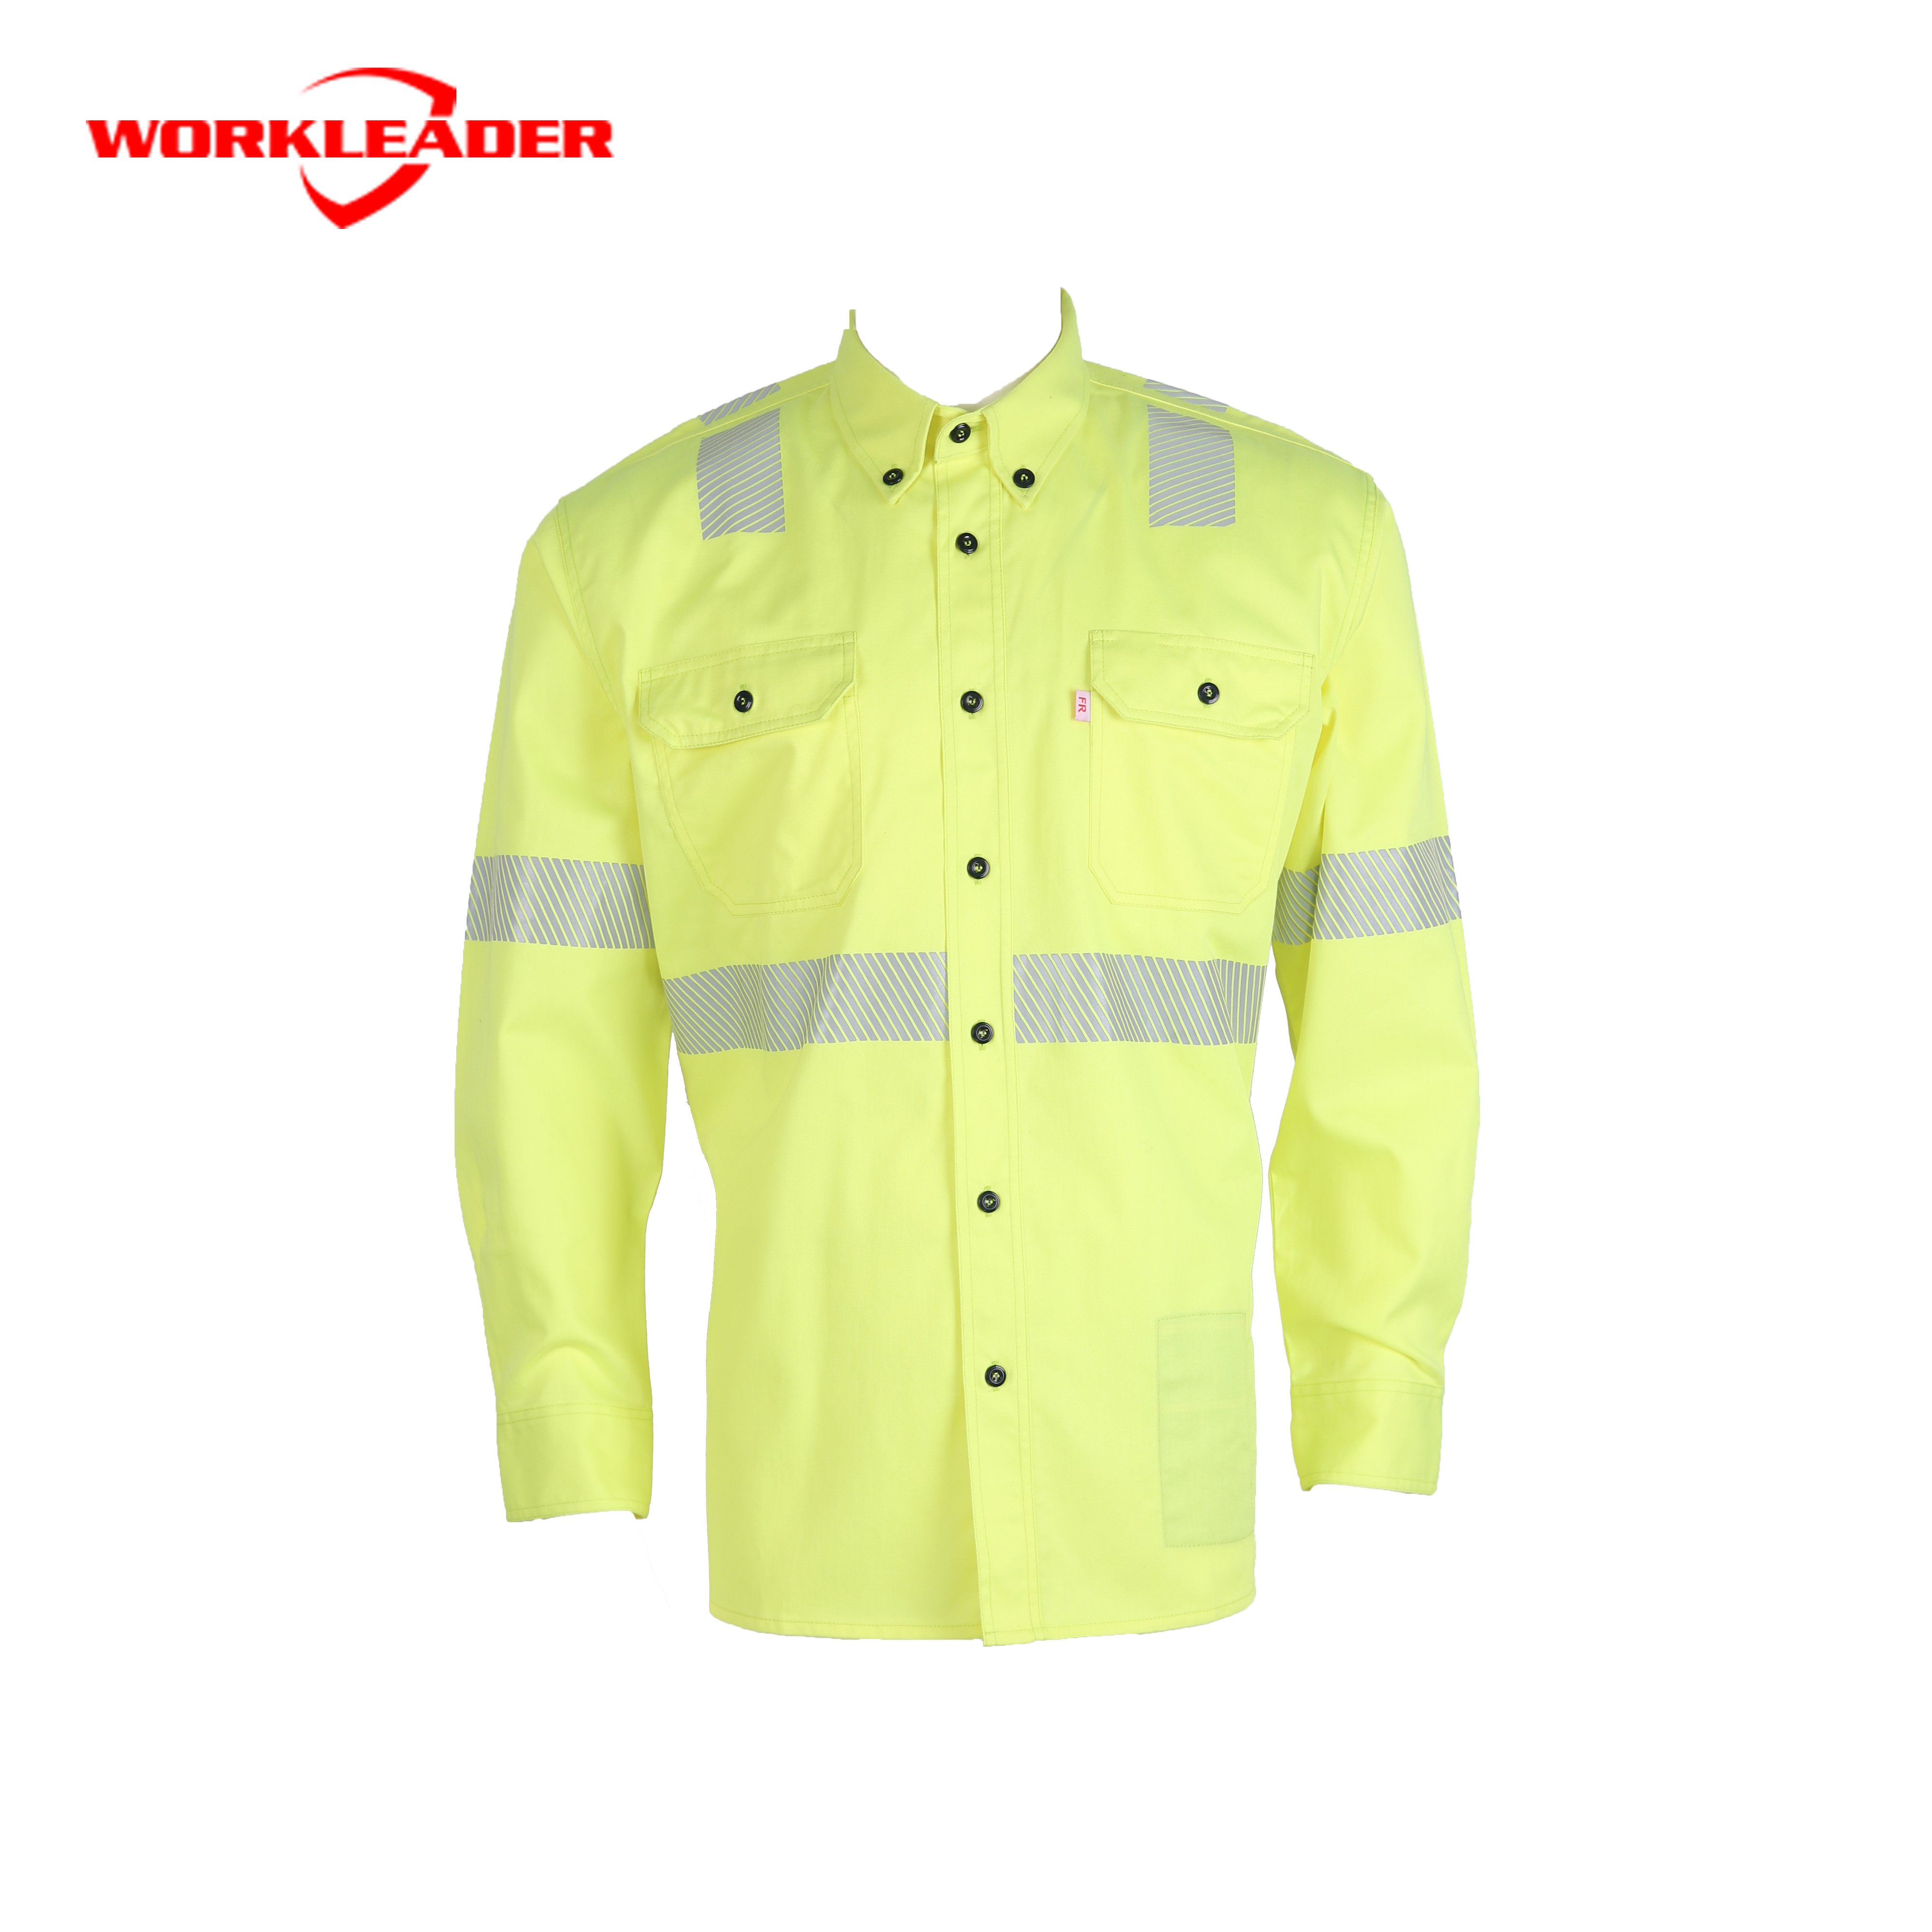 UL Nfpa2112 Hi-Vis Yellow Arc Flash Welding Fr Shirt